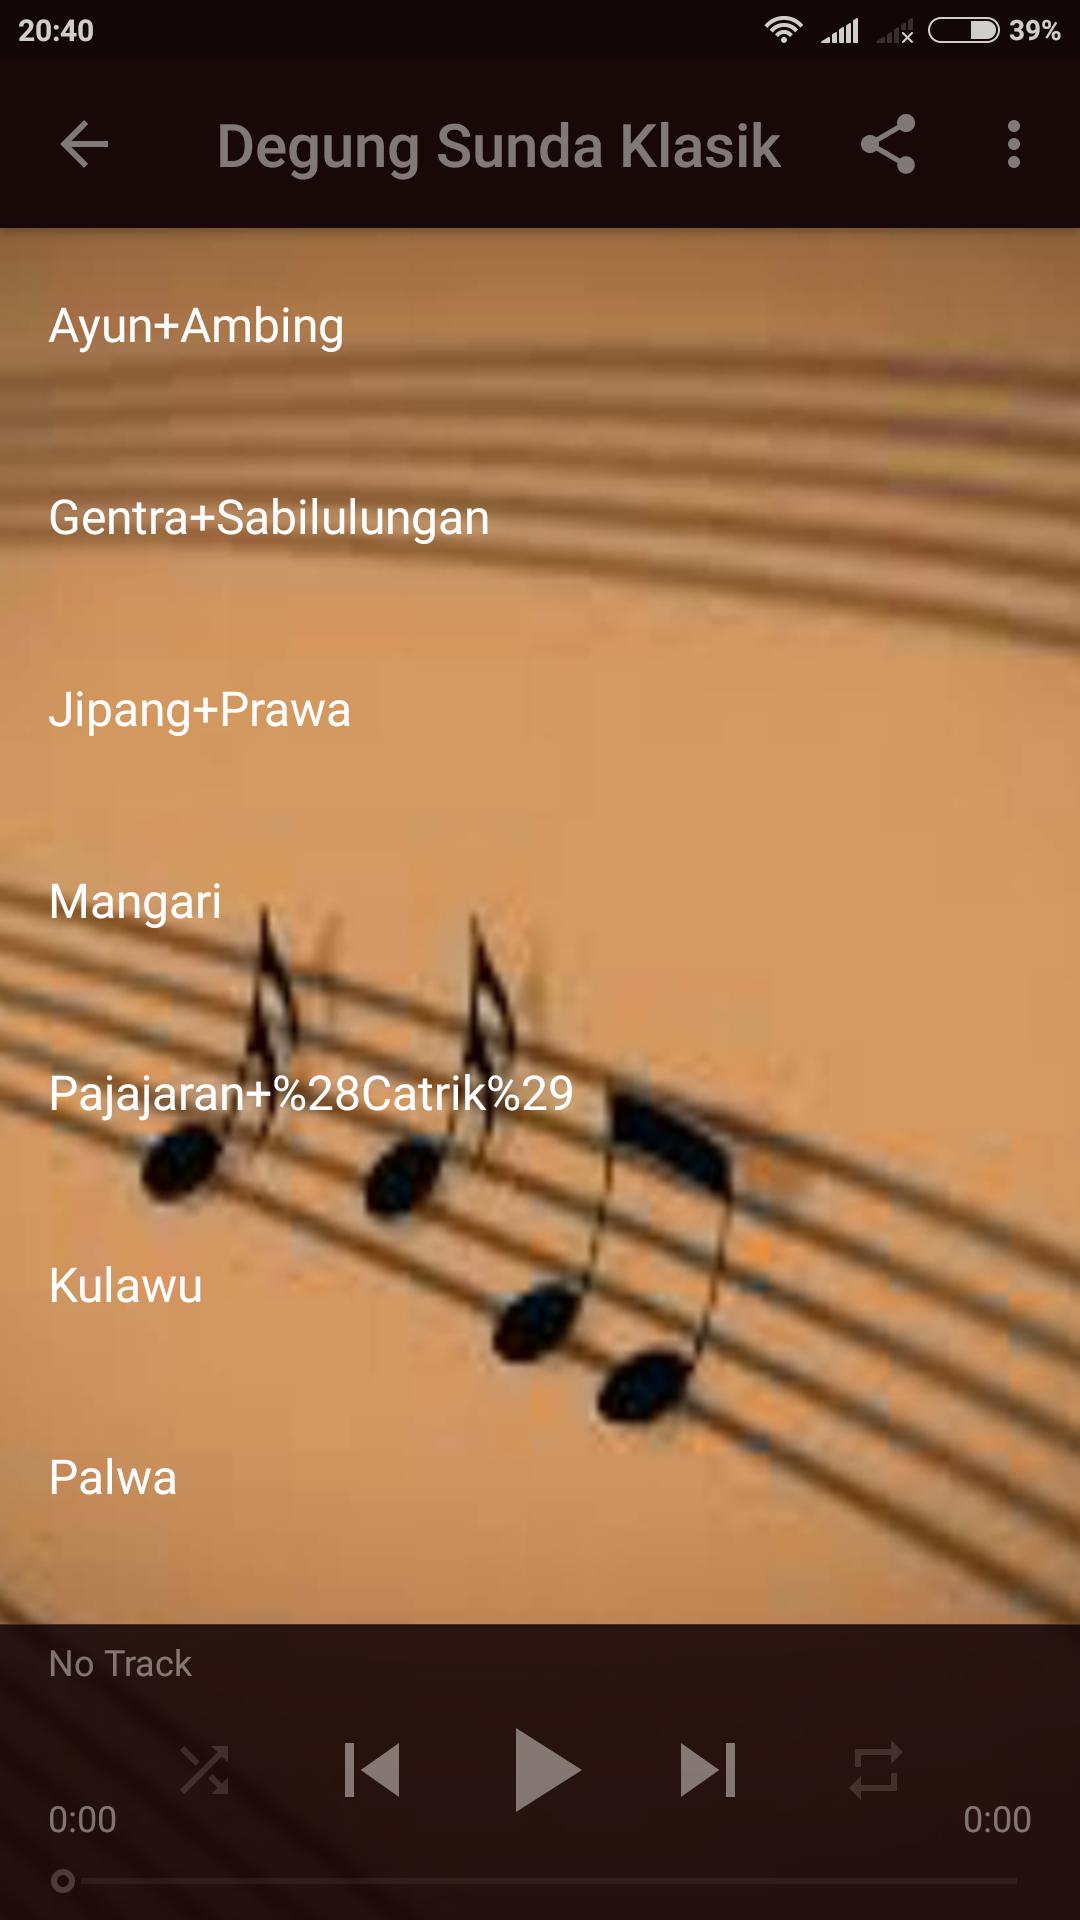 Lagu Instrumen Sunda Mp3 : Download Instrumen Musik Lagu Anak-Anak PAUD | PAUD Kismantoro - Instrumen sunda lagu mp3 download from lagump3downloads.net.